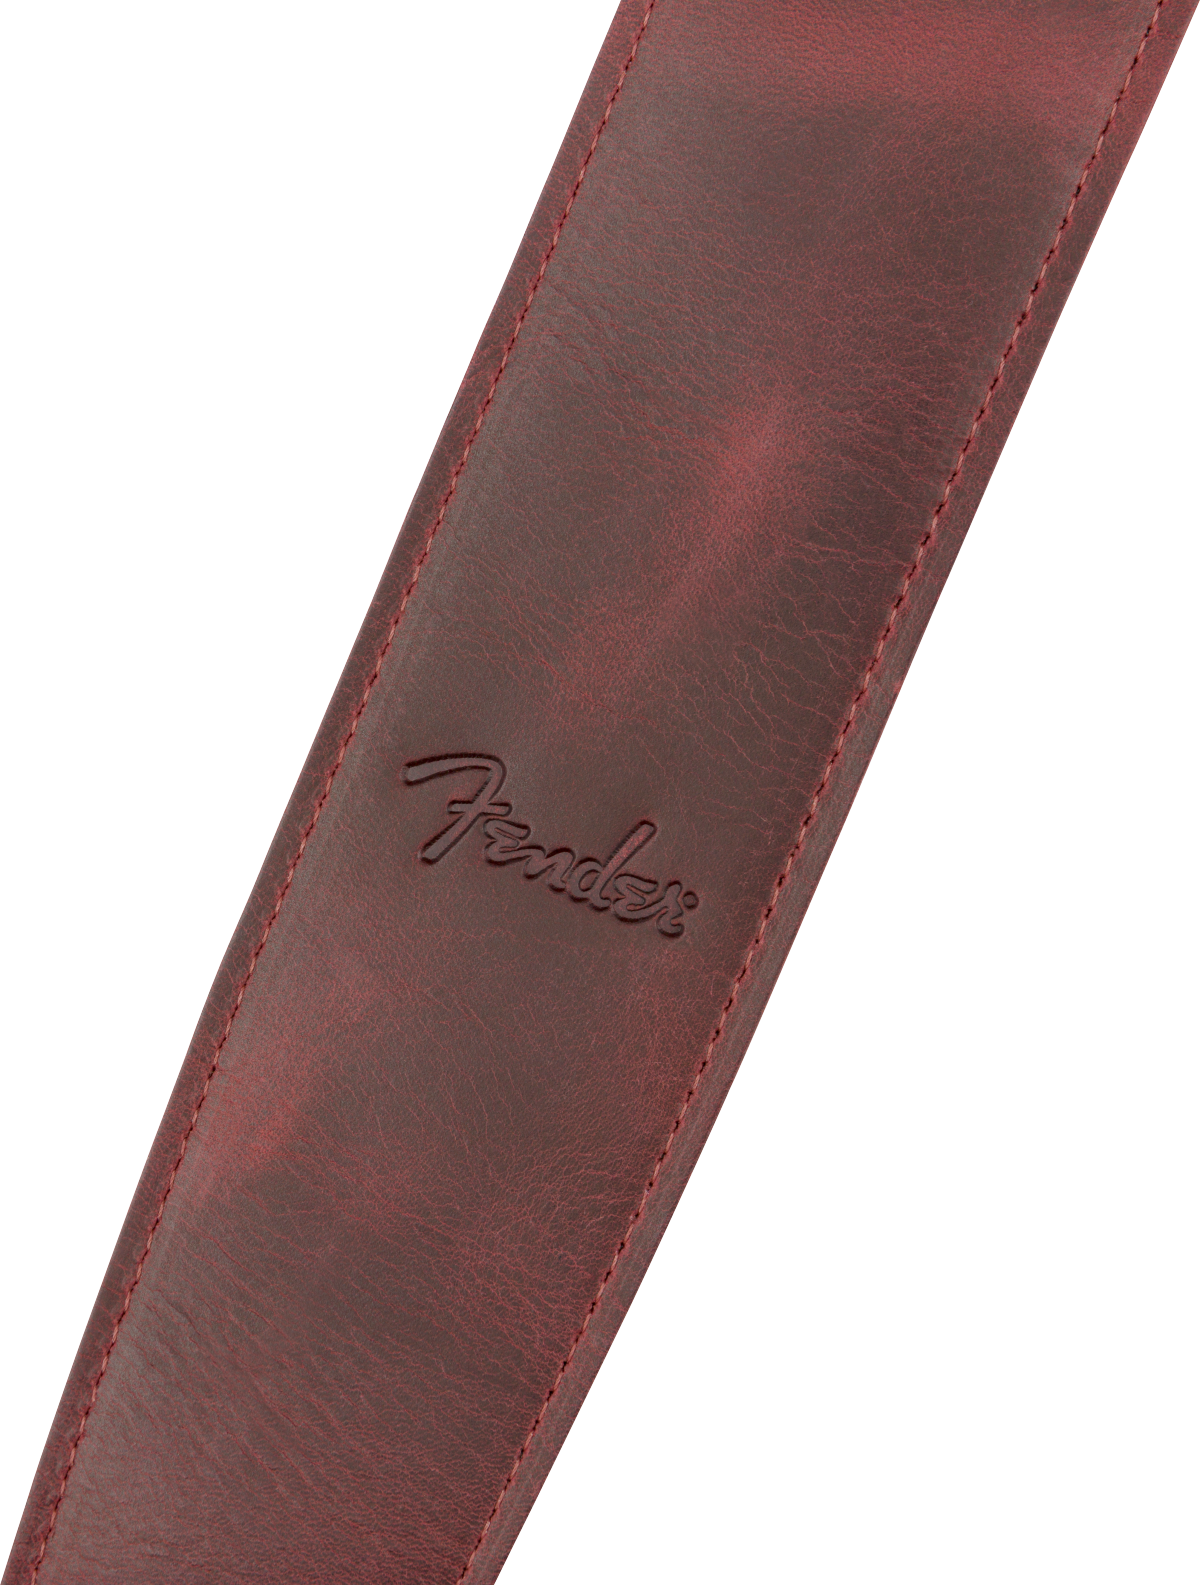 Fender Broken-in Leather Strap Tan